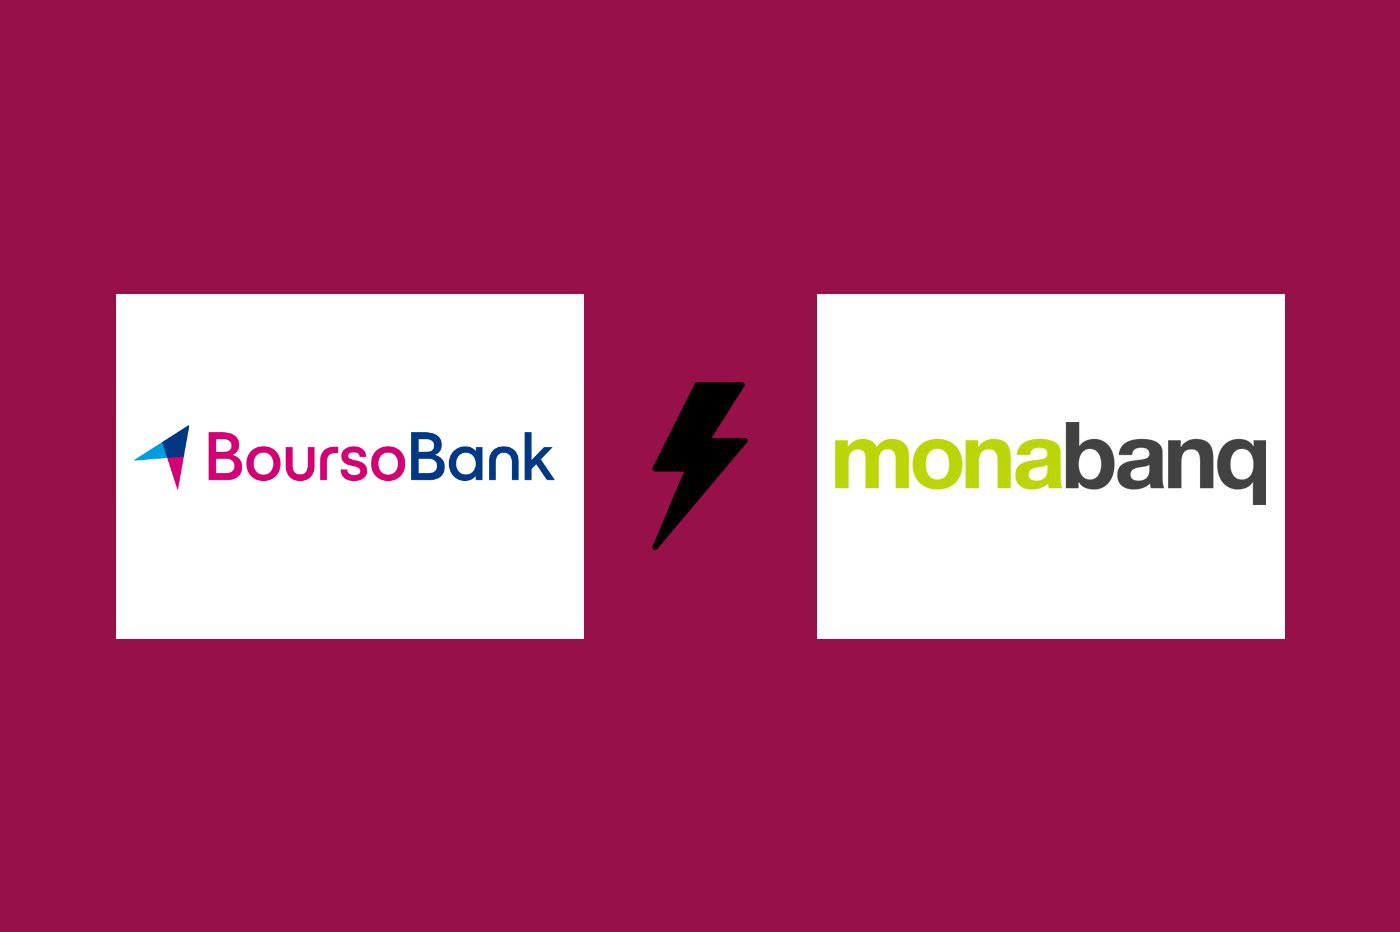 BoursoBank vs Monabanq